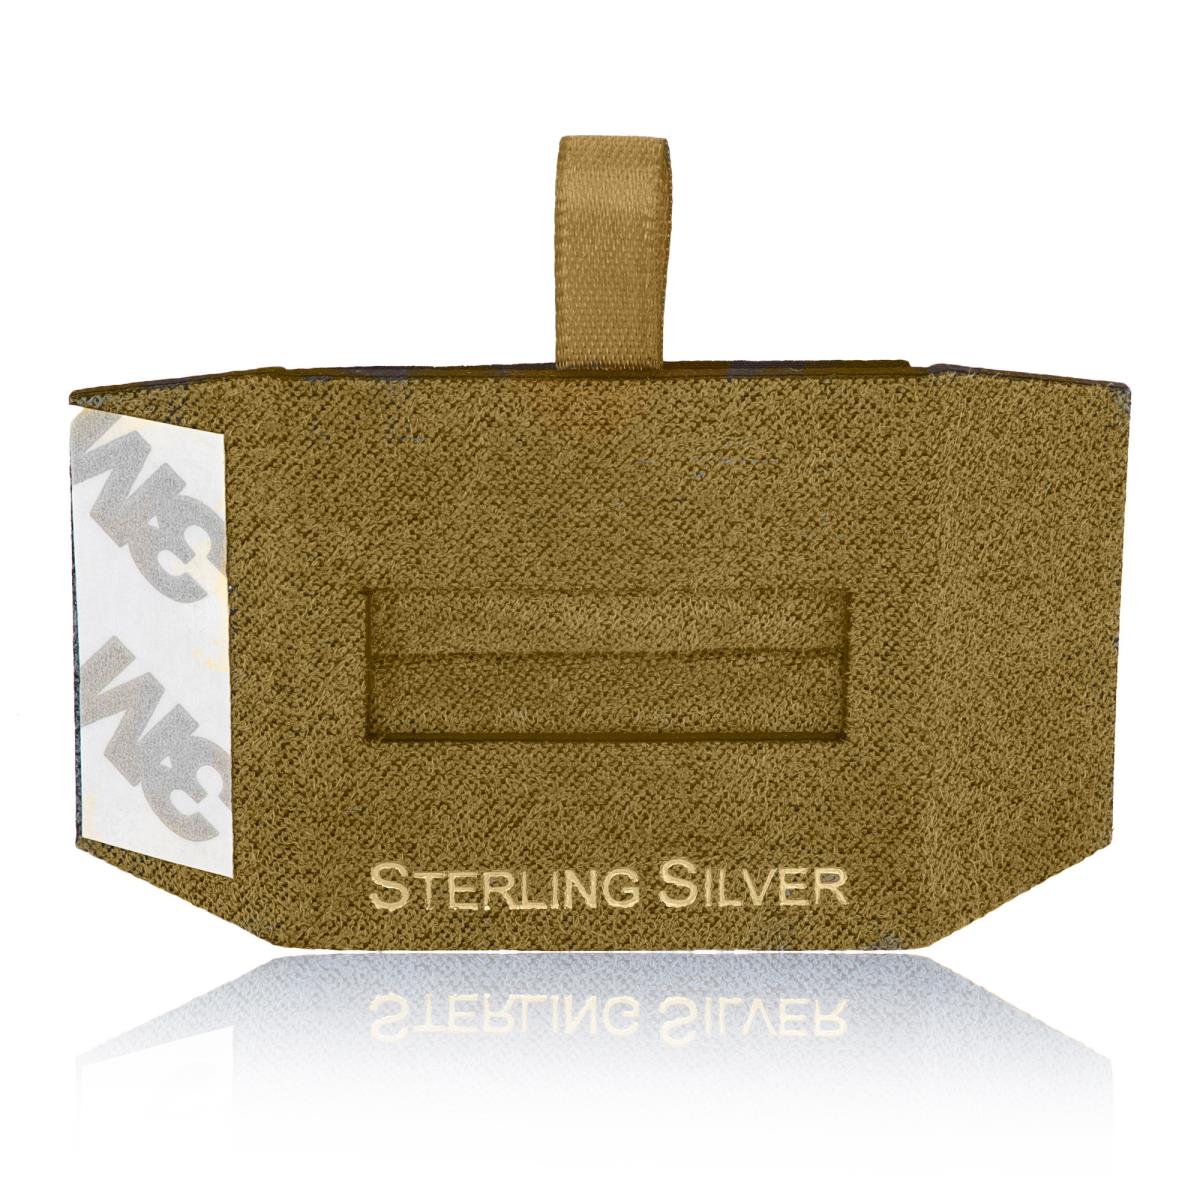 Mushroom Sterling Silver, Gold Foil Ring Insert (Box B06-159/Mush/M)